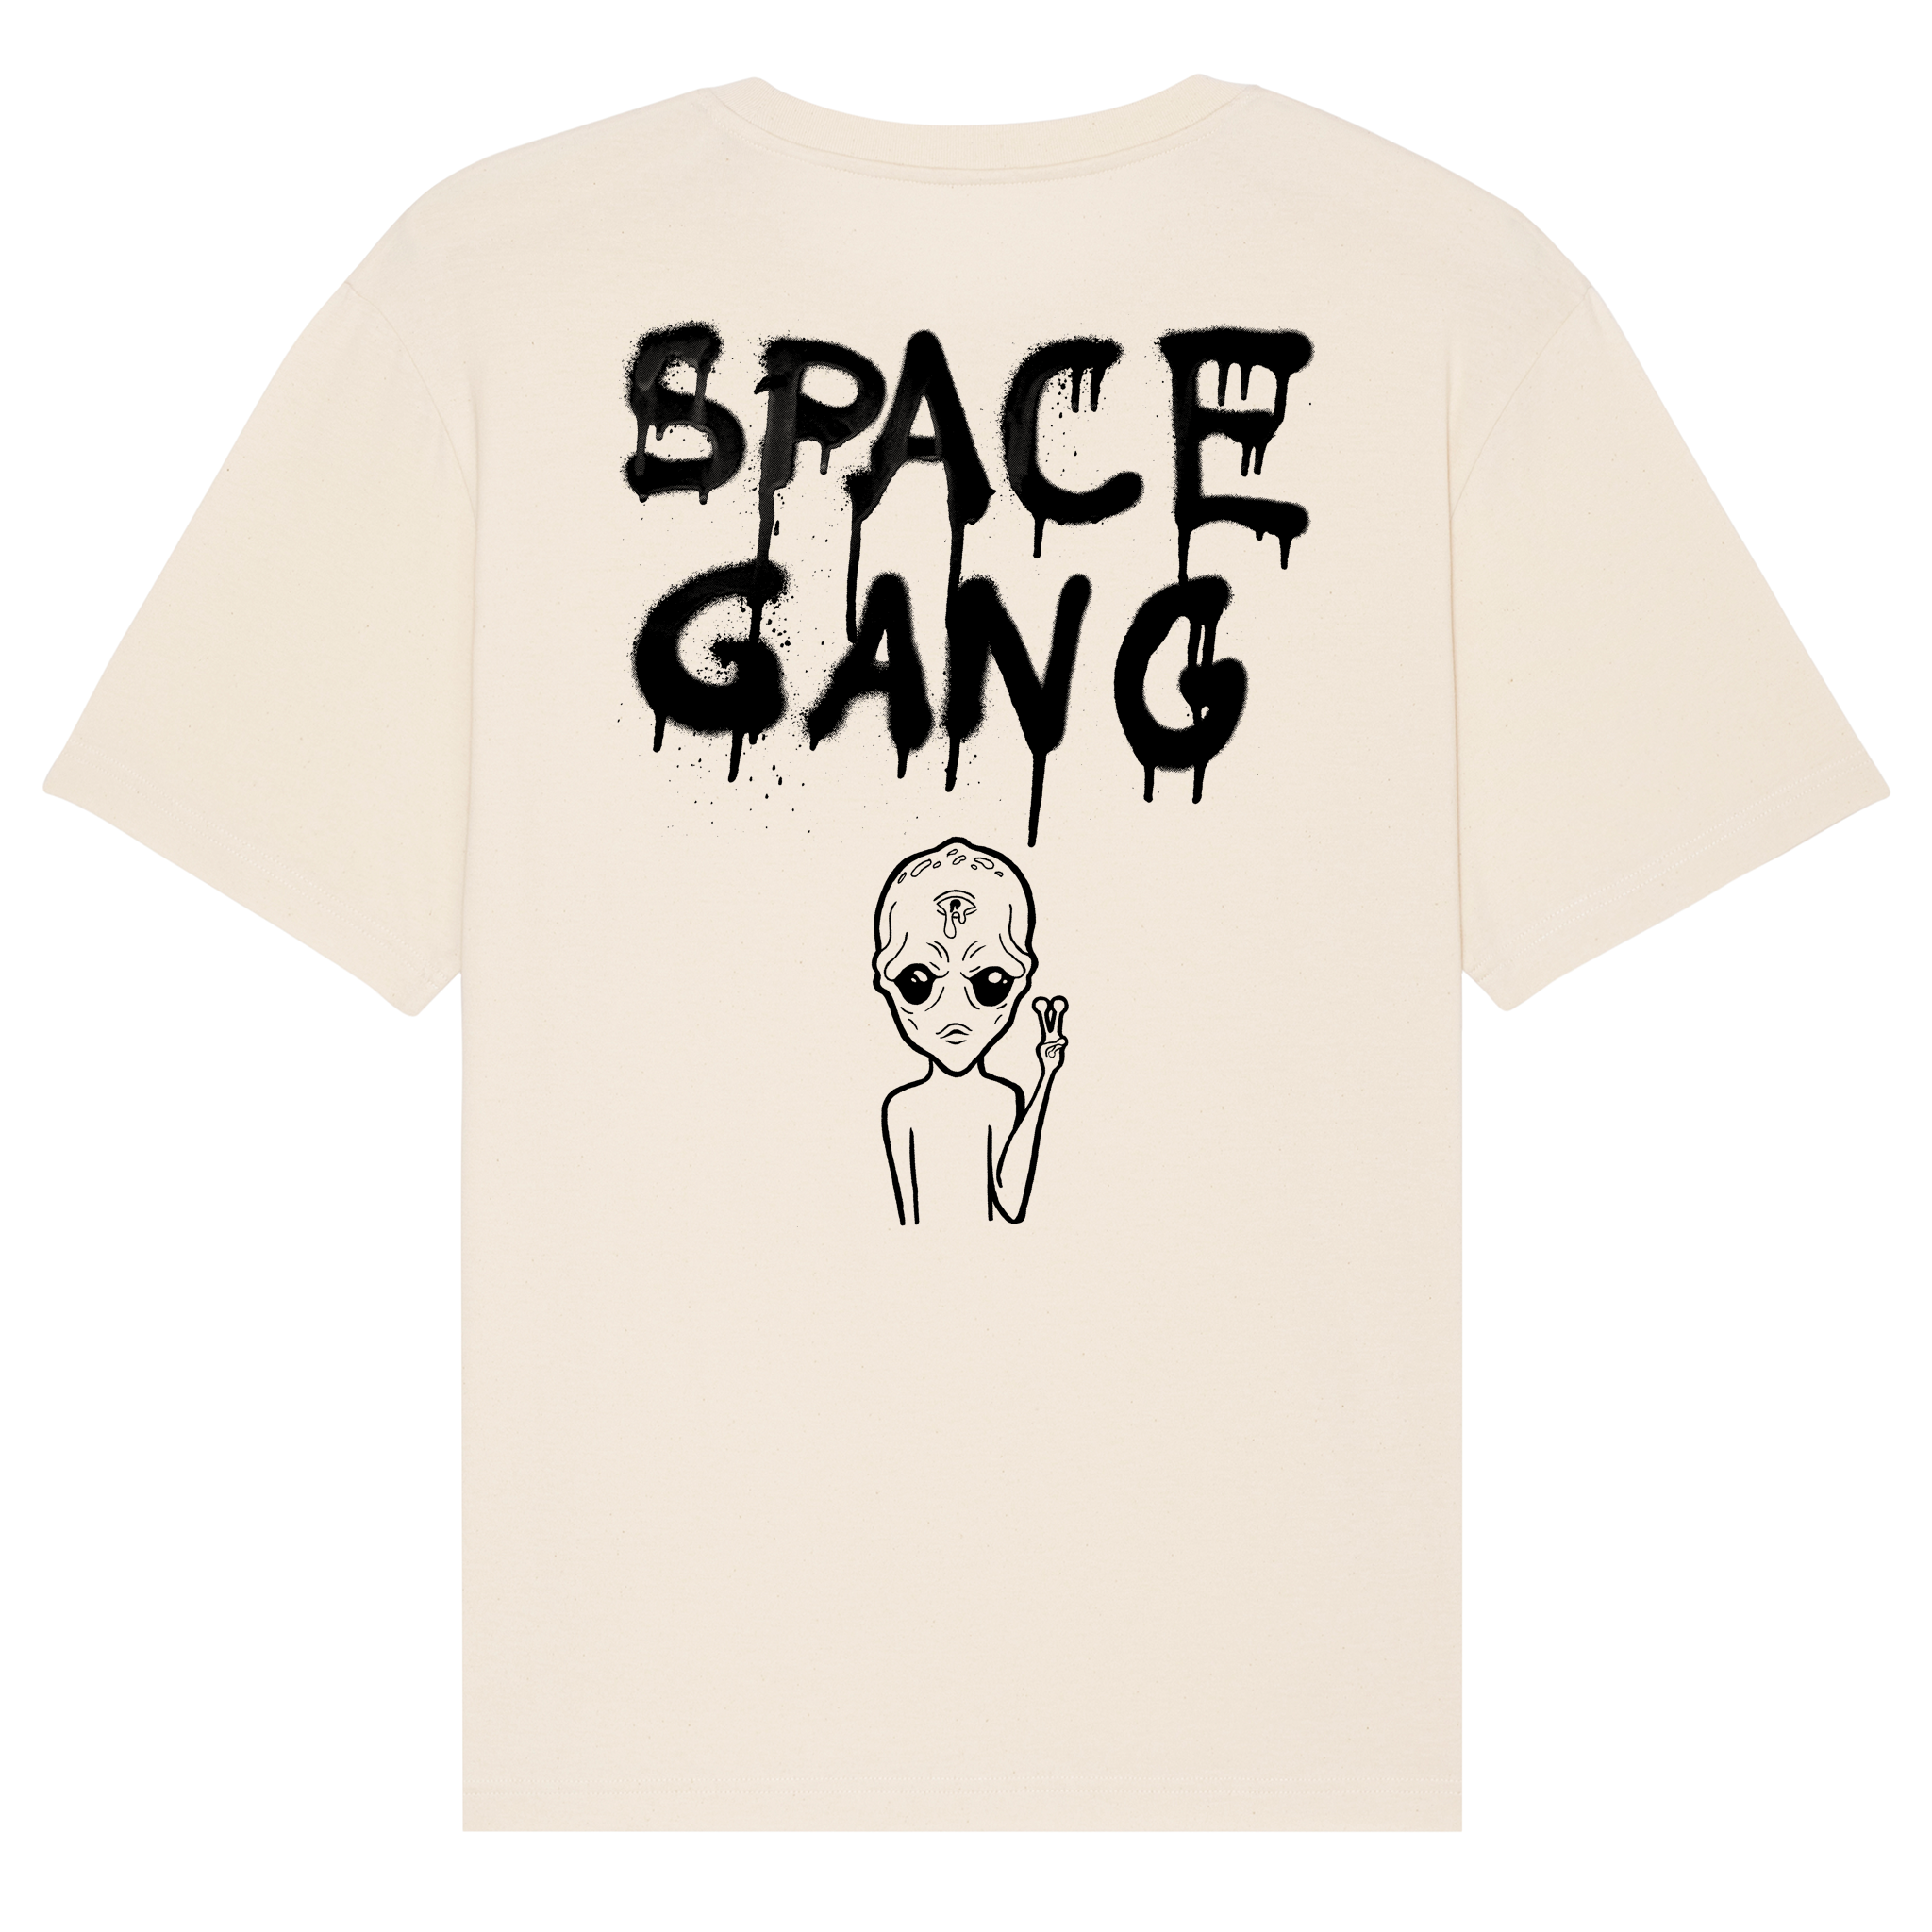 shirt Gang\